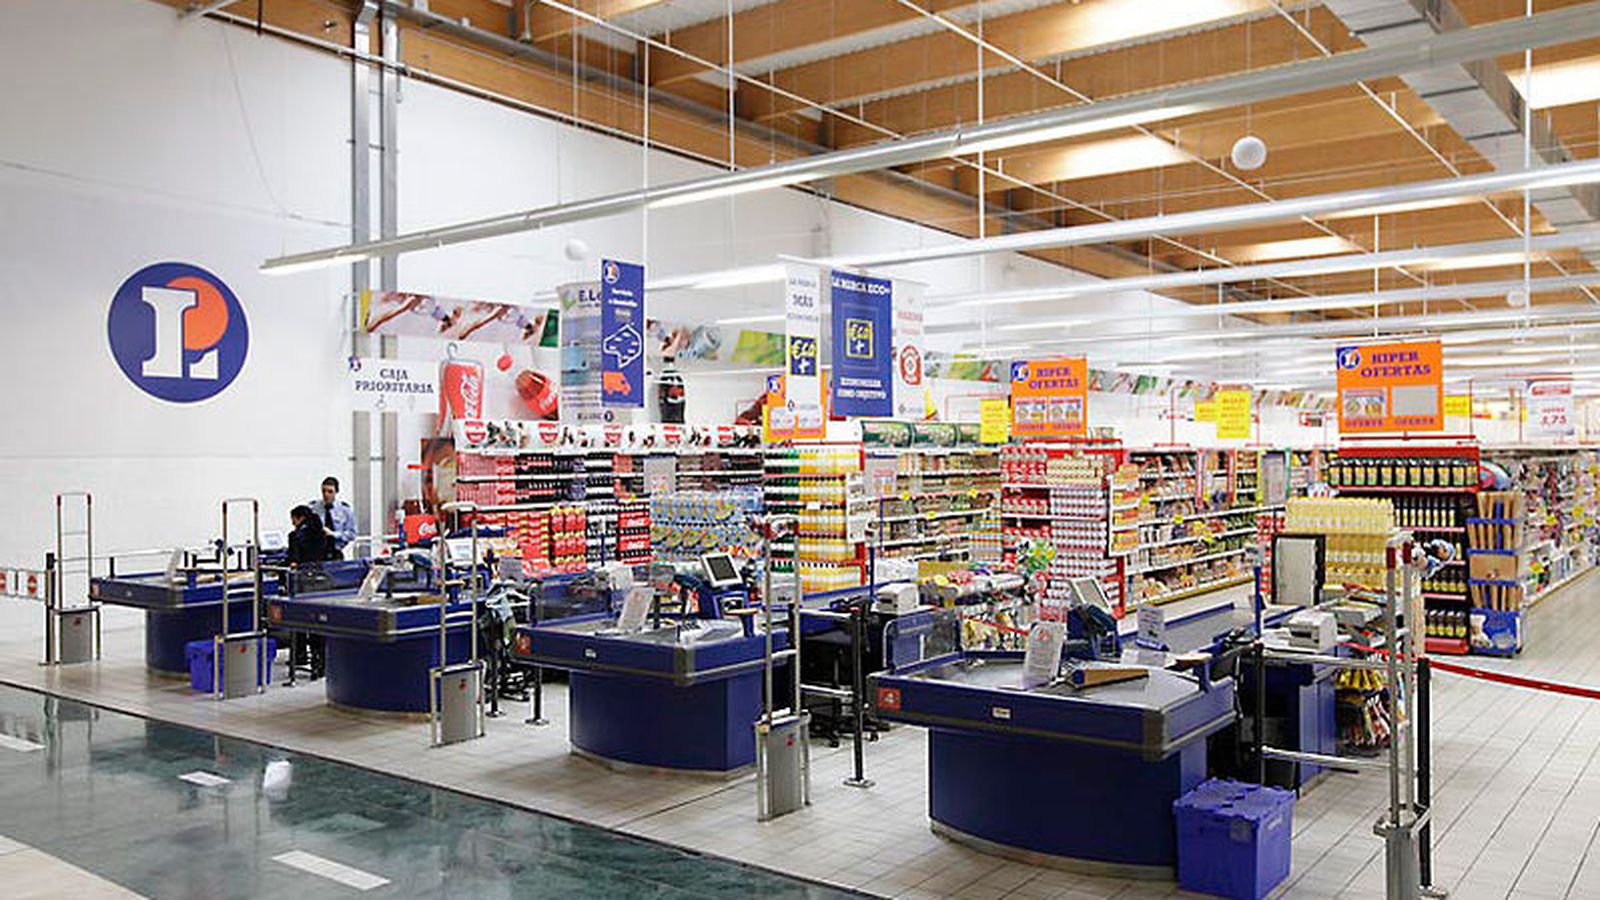 Foto: El supermercado E.Leclerc del centro comercial Islazul, en Carabanchel. (Islazul)